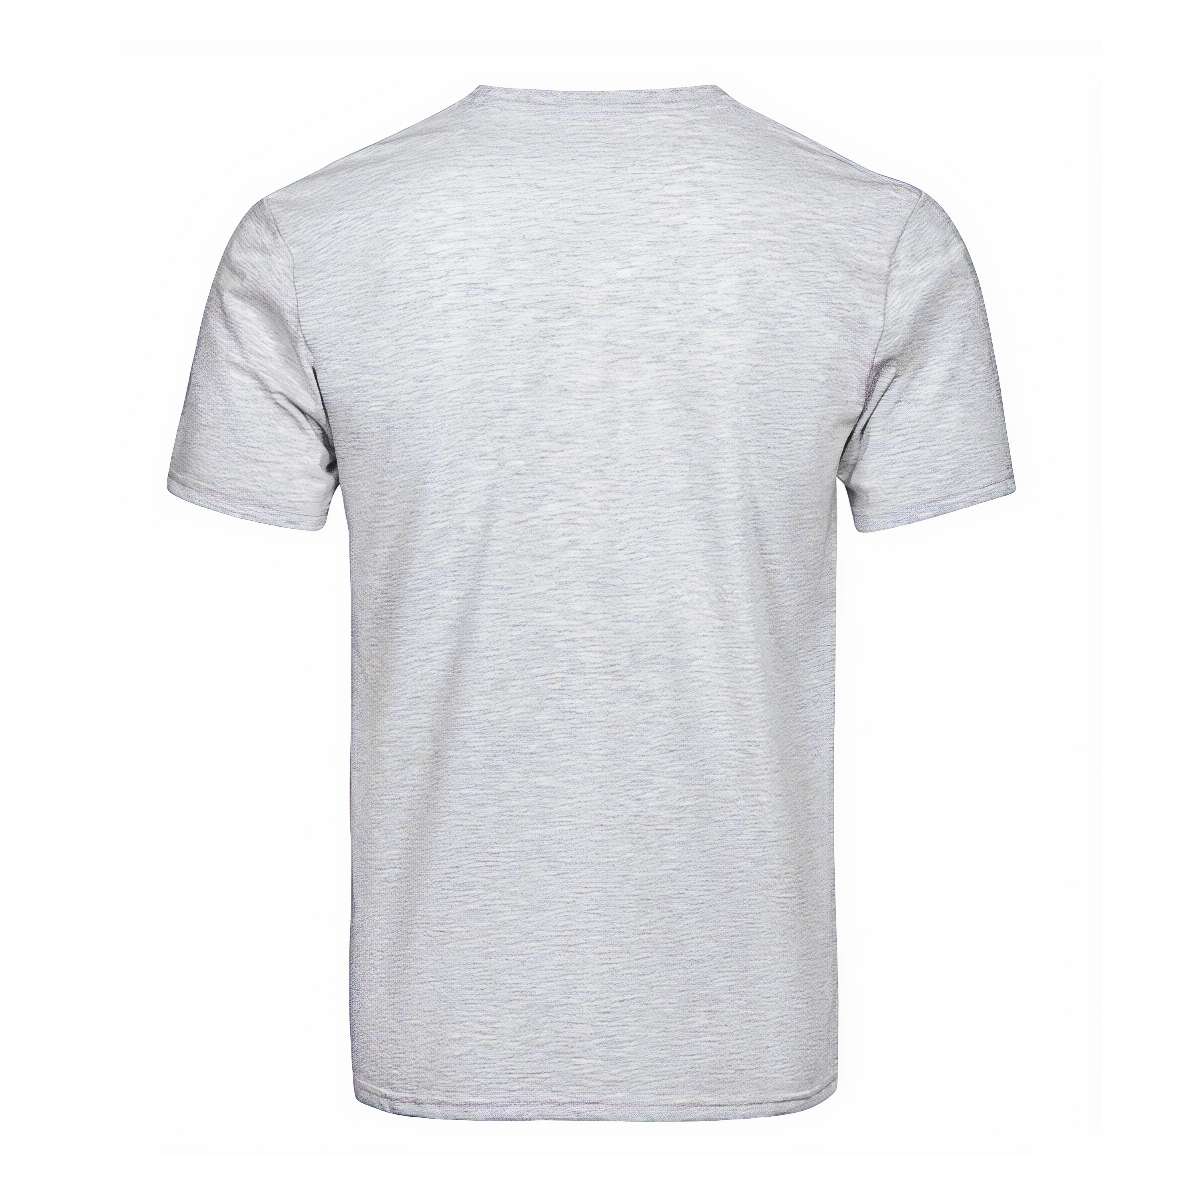 Arnott Tartan Crest T-shirt - I'm not yelling style